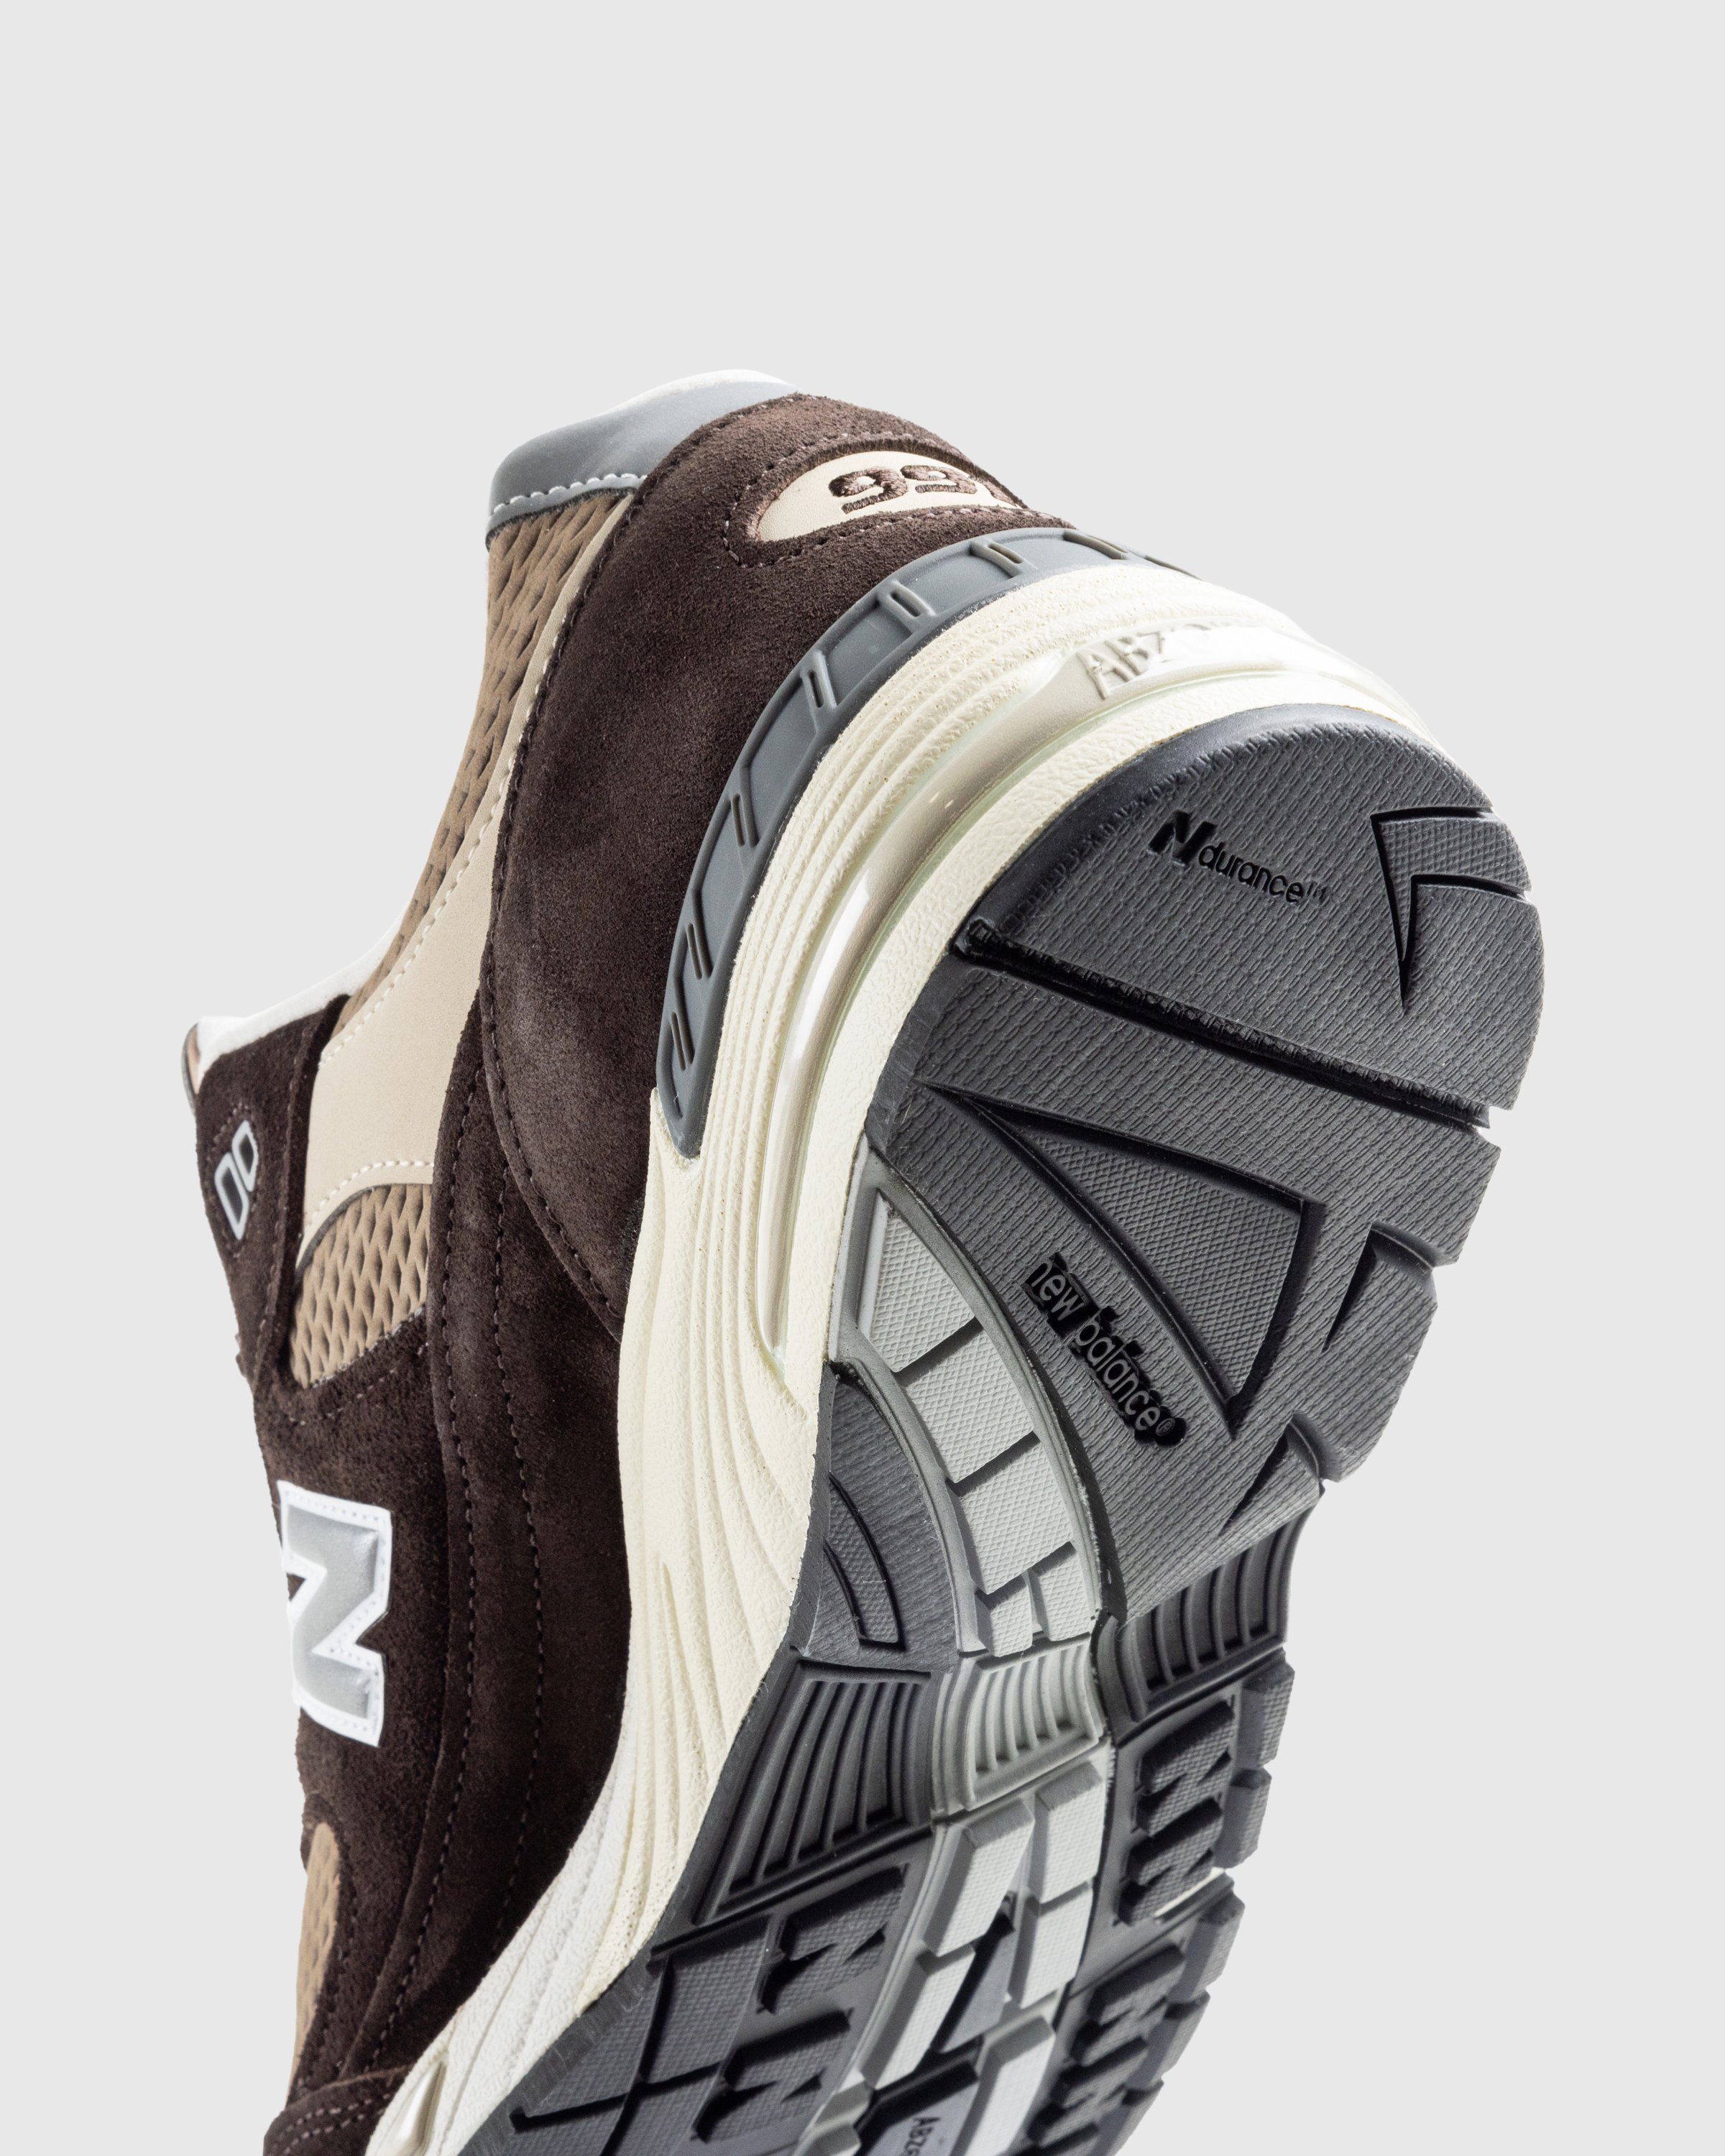 New Balance - M991BGC DELICIOSO - Footwear - Brown - Image 6